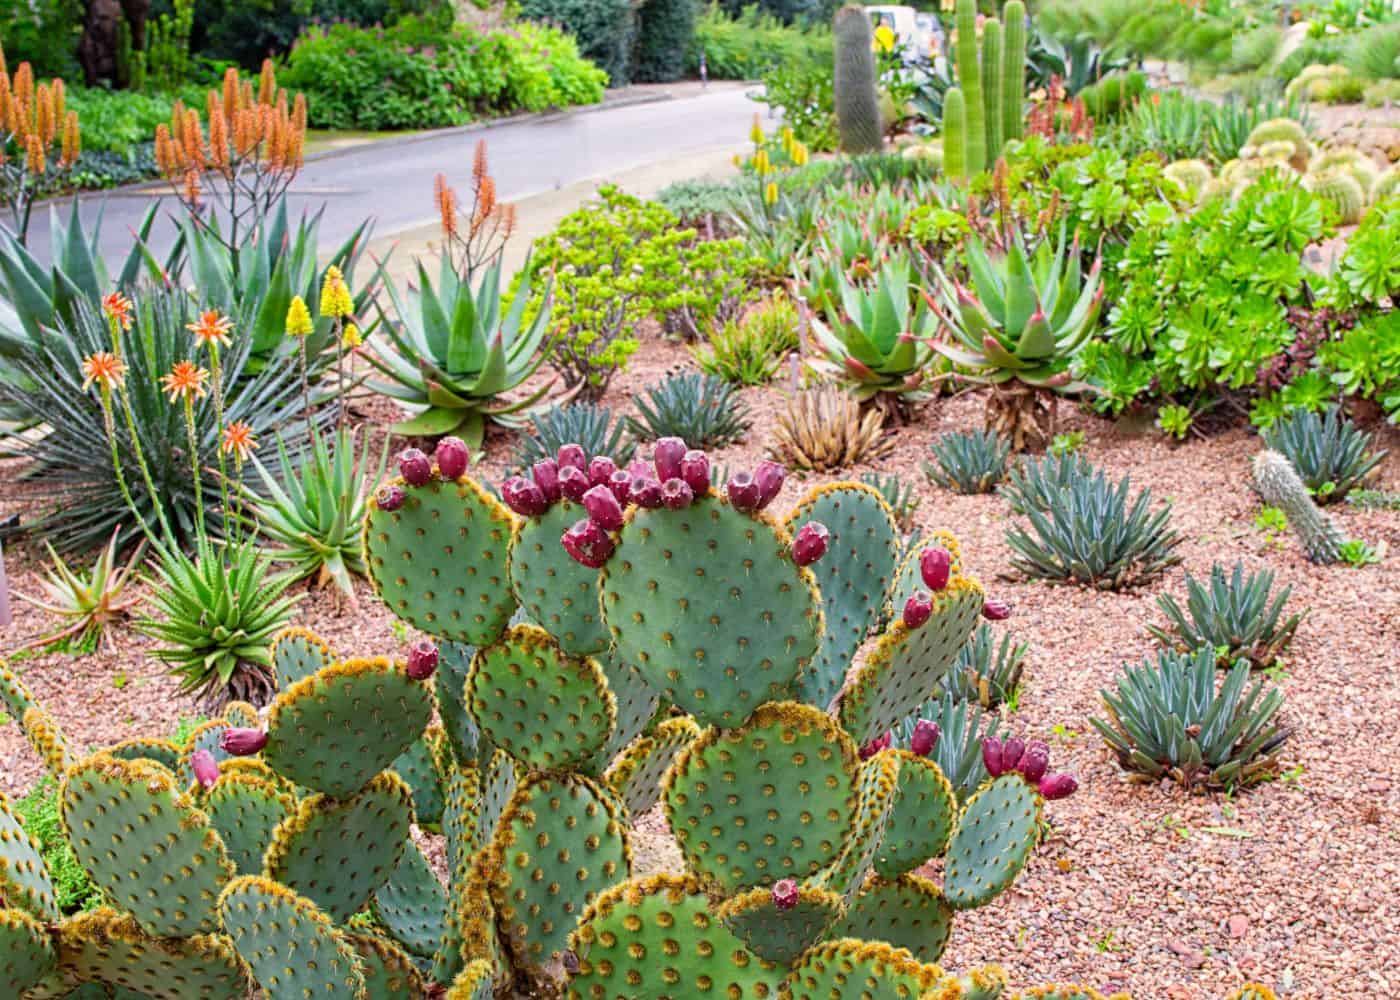 Succulent and cactus garden outdoors